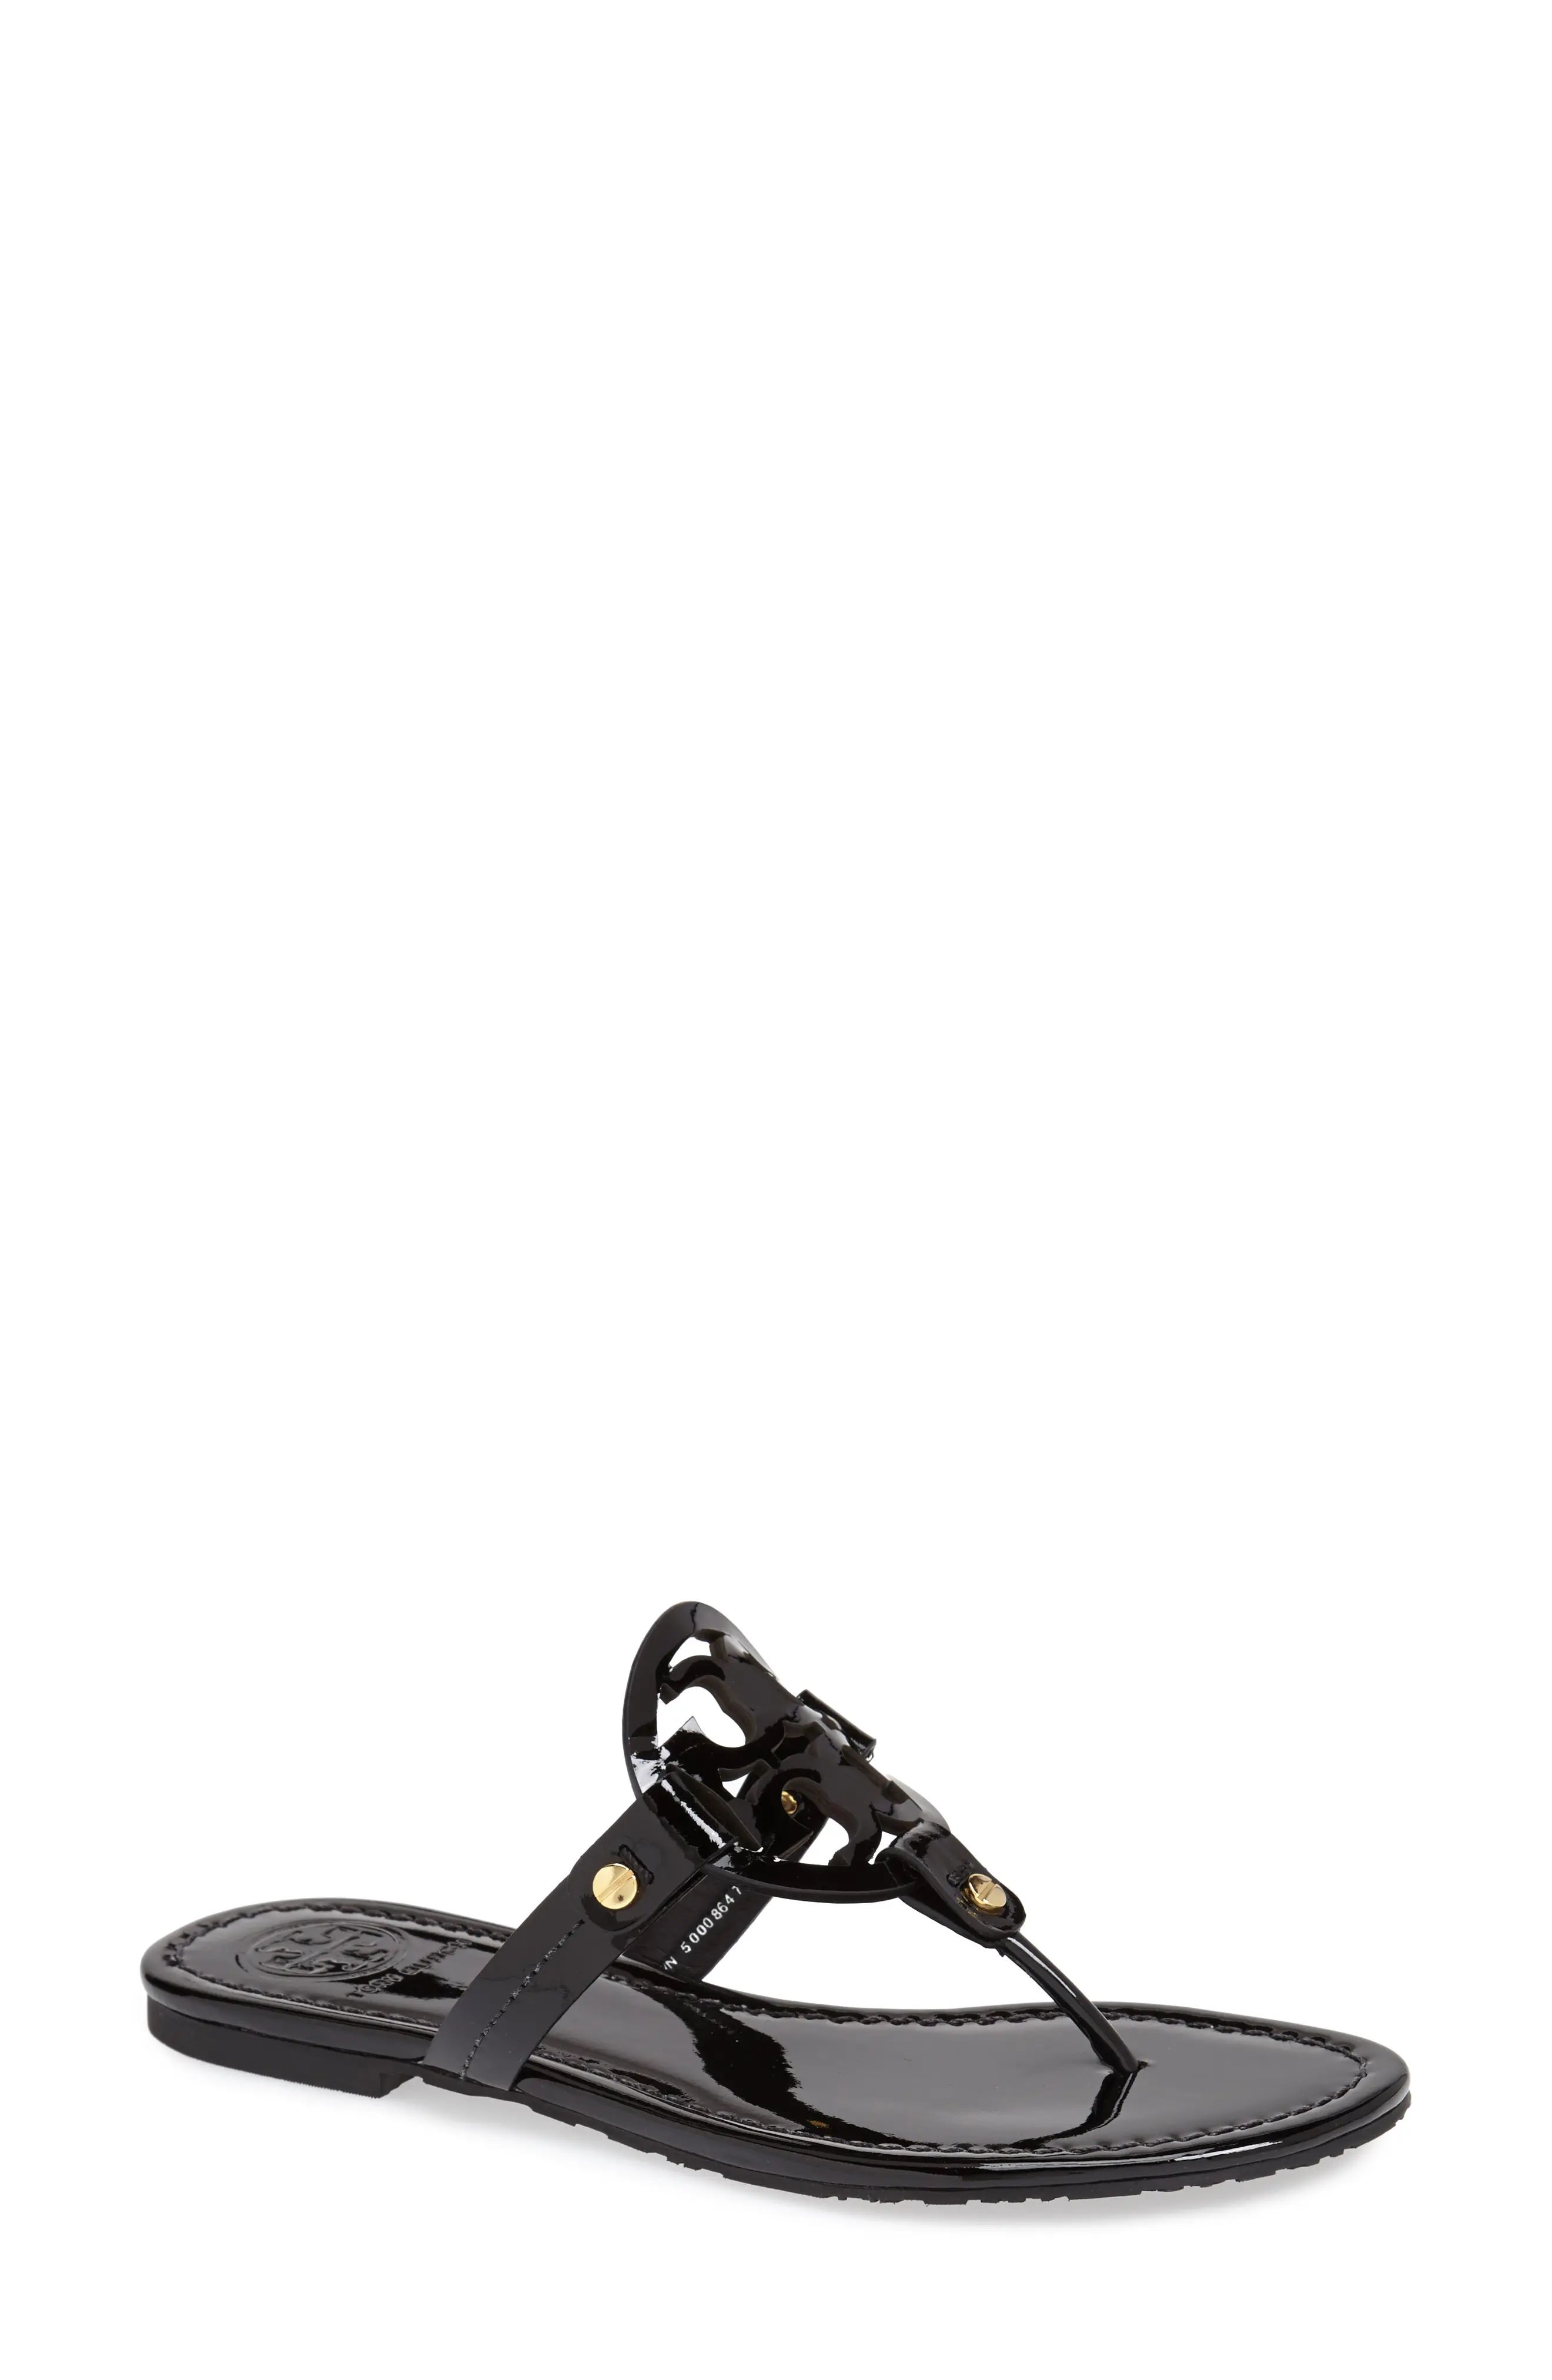 Tory Burch Miller Sandal in Black Patent at Nordstrom, Size 7 | Nordstrom